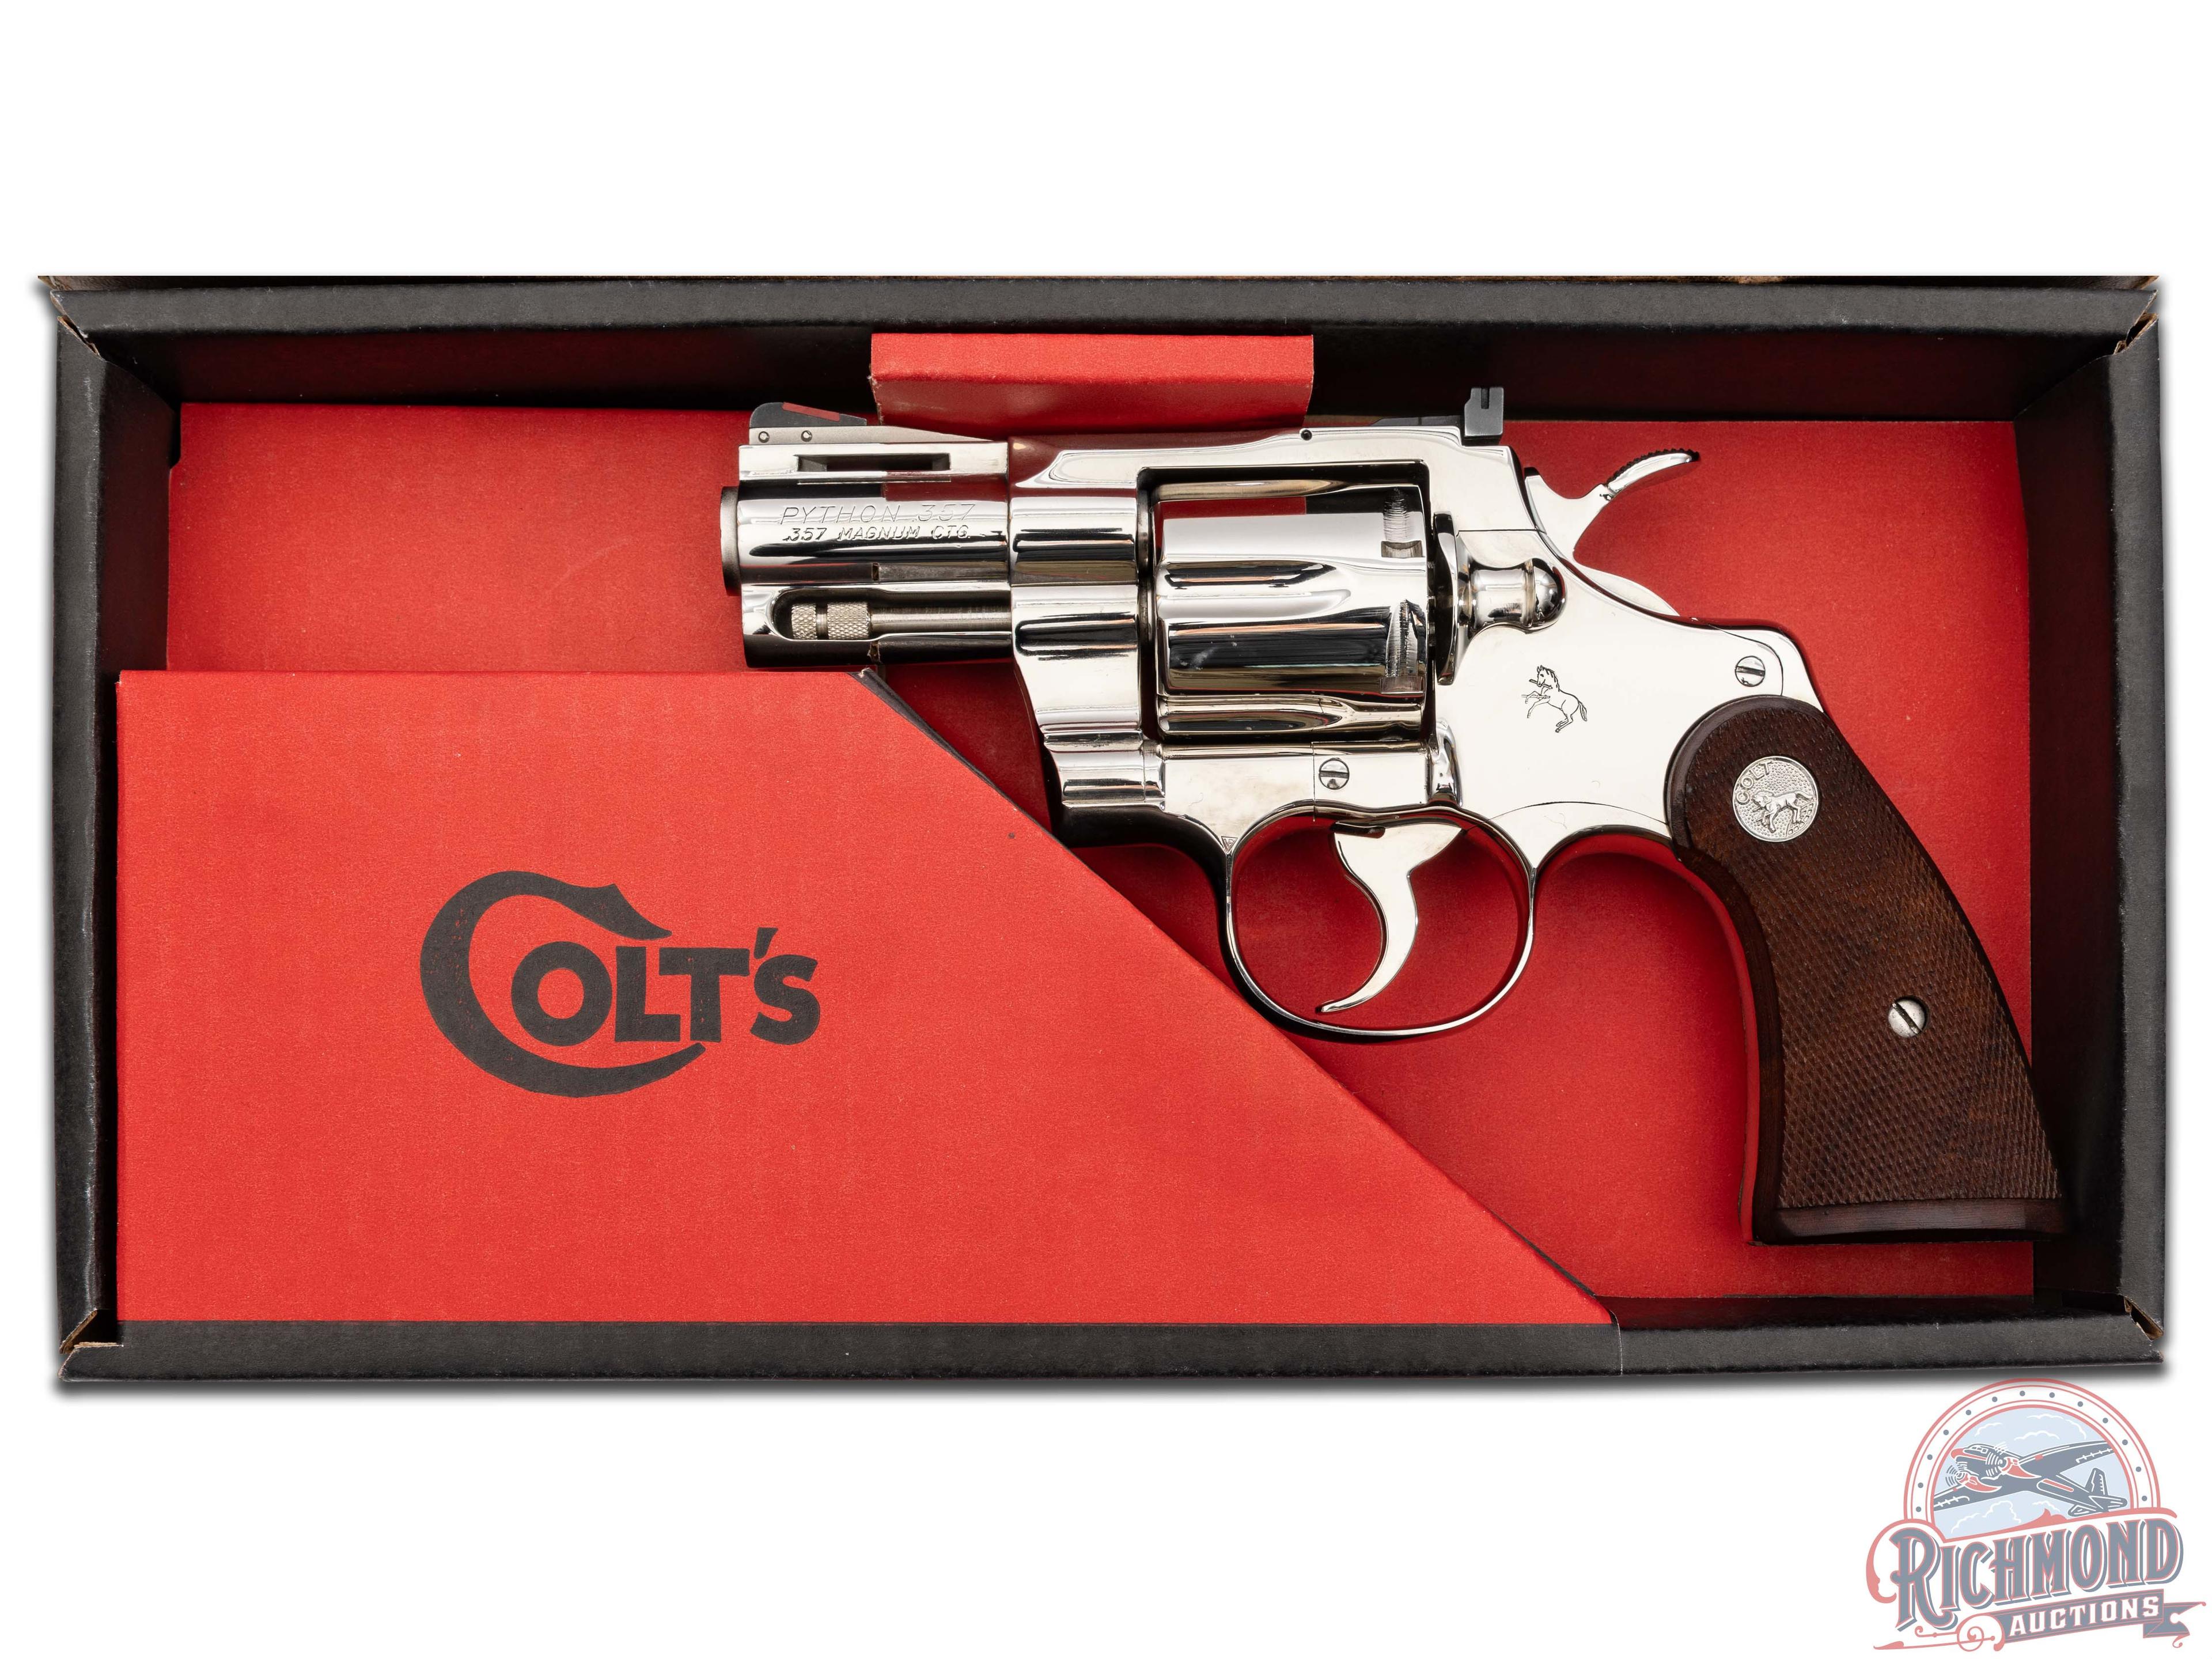 1971 Colt Python 2.5" Nickel .357 Magnum Double Action Revolver